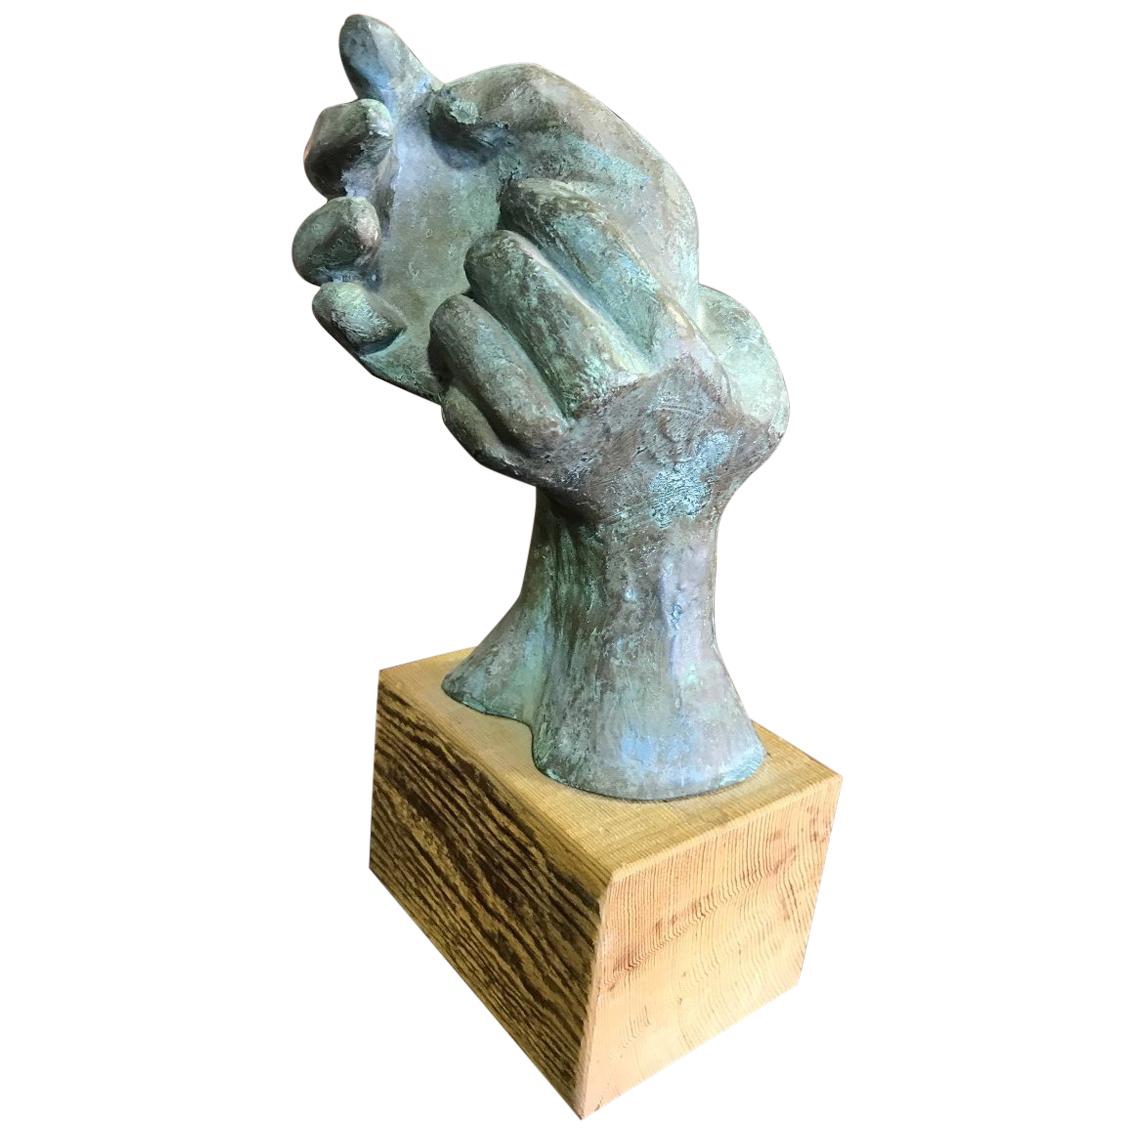 Ceramic Signed Hand Sculpture on Wood Display Base